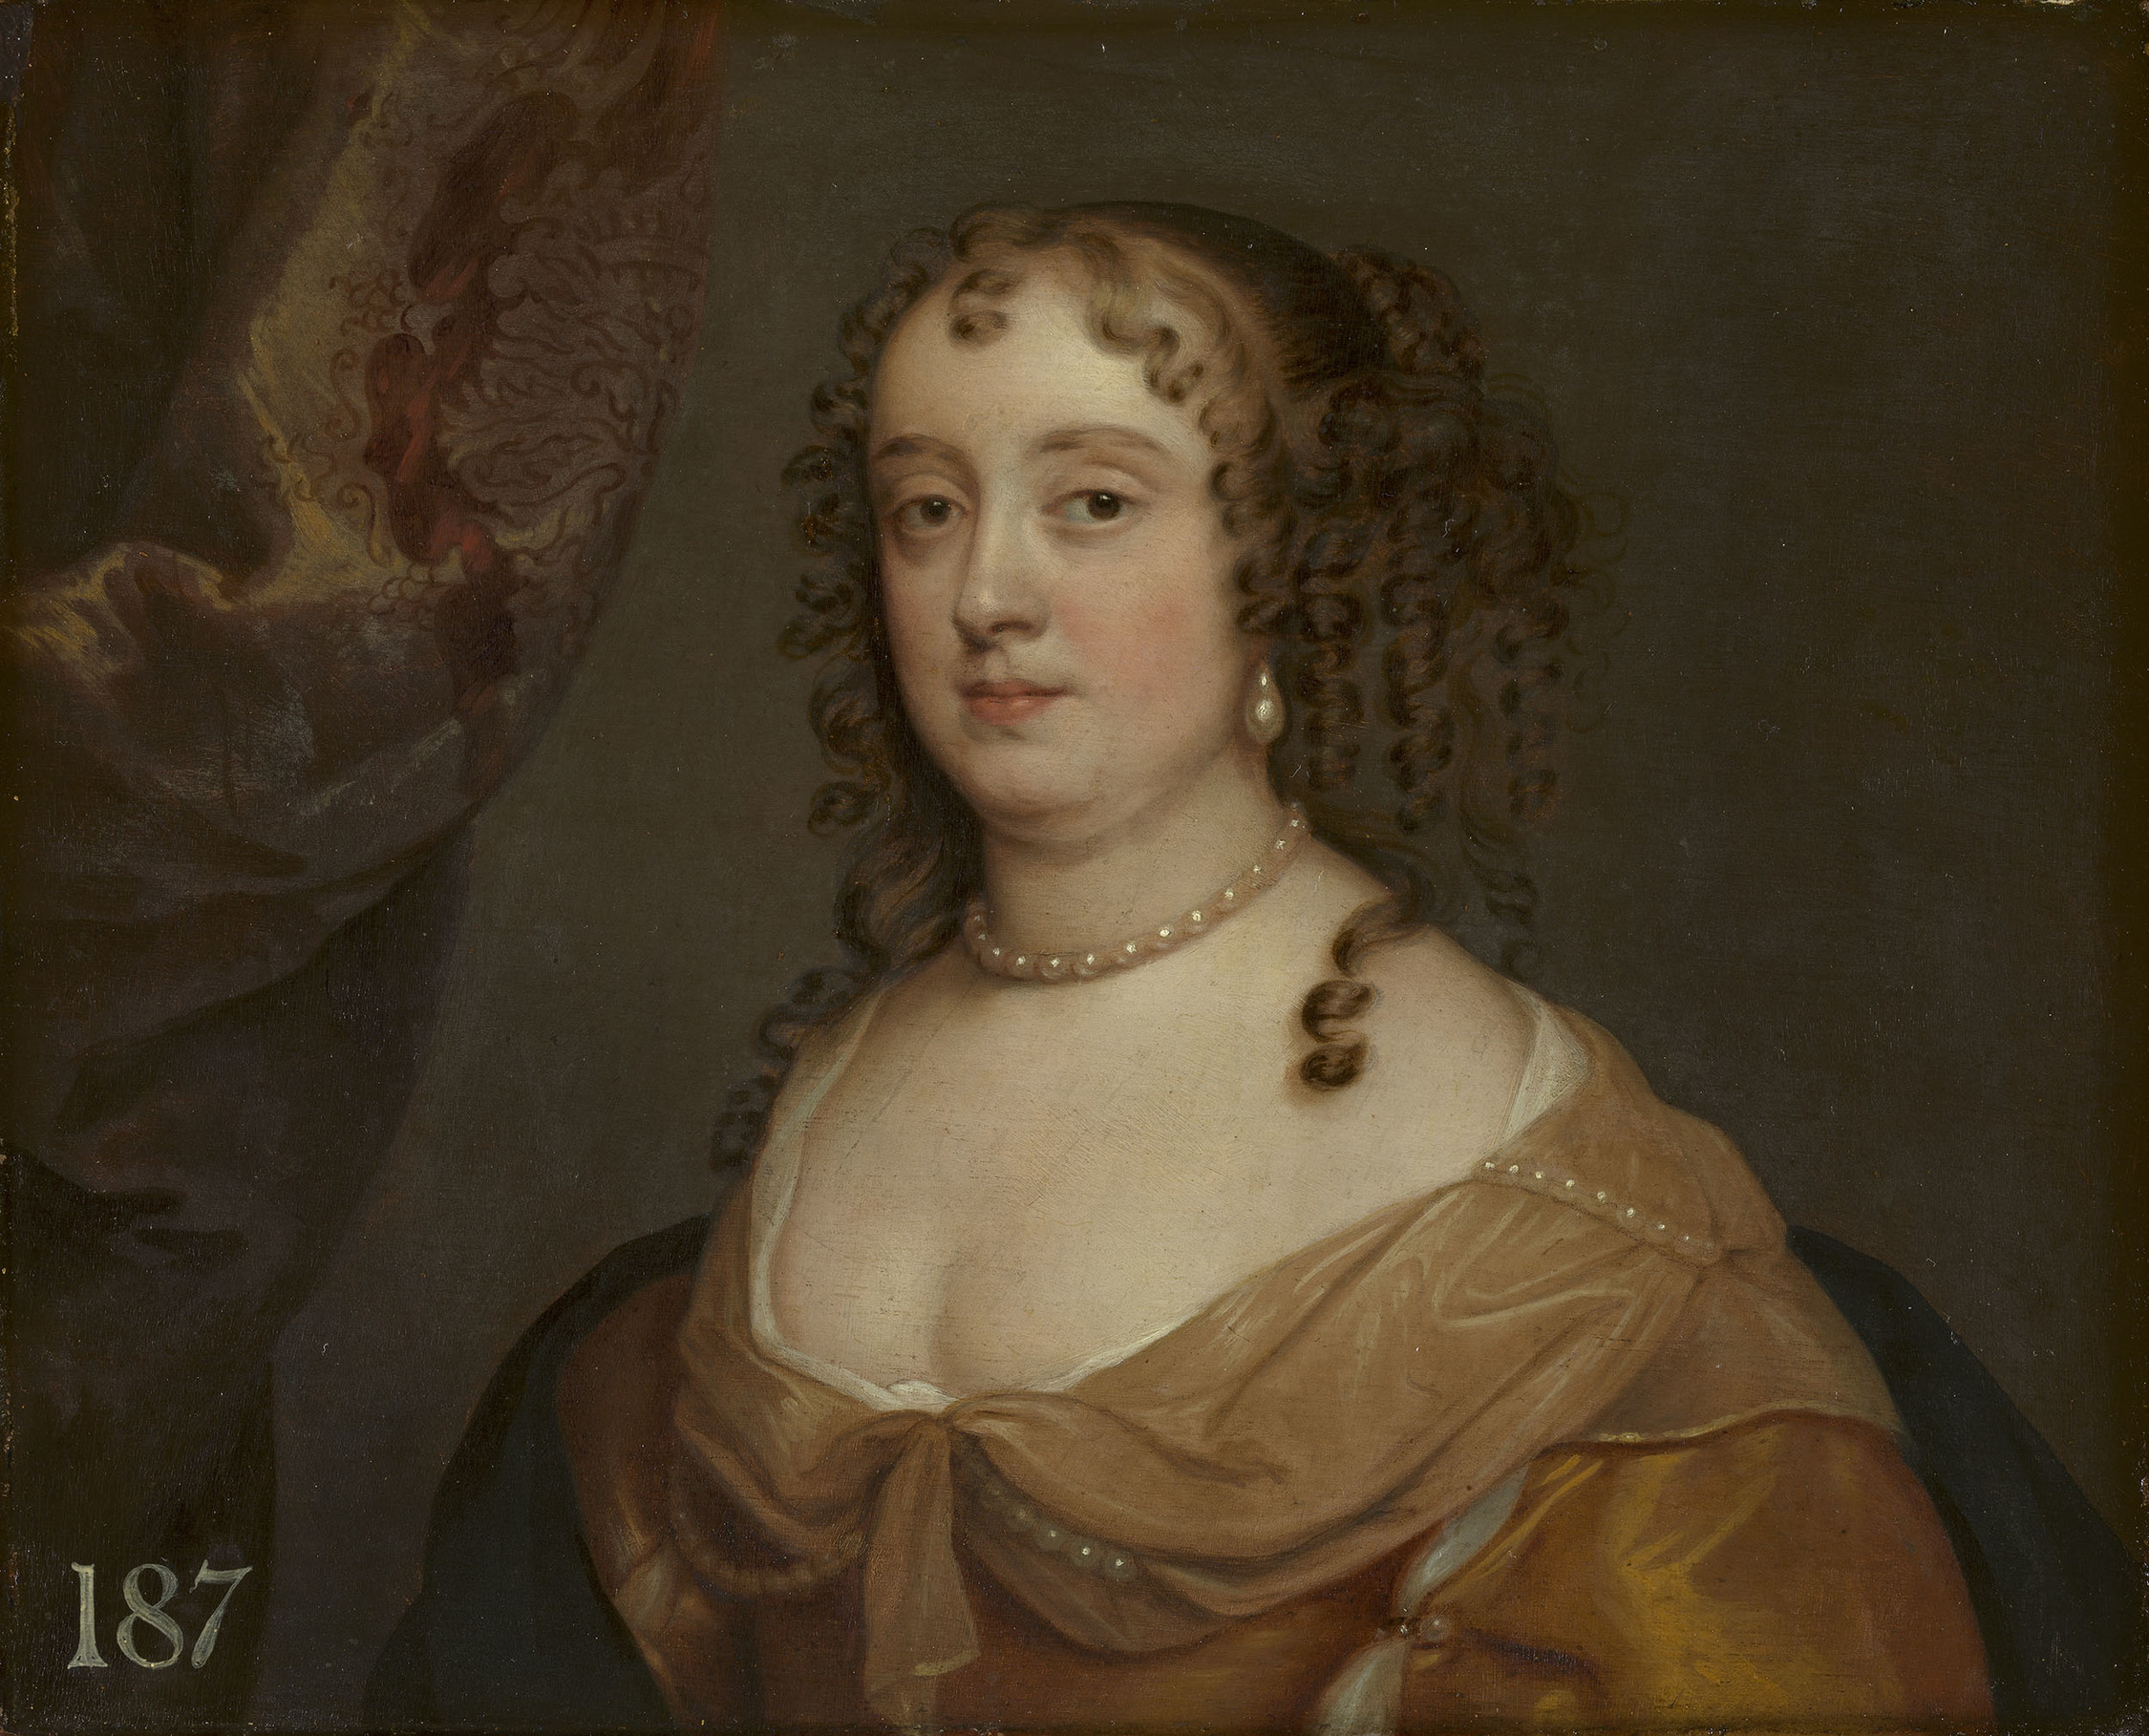 Barbara Villiers, Countess of Suffolk (1622 – 1681)